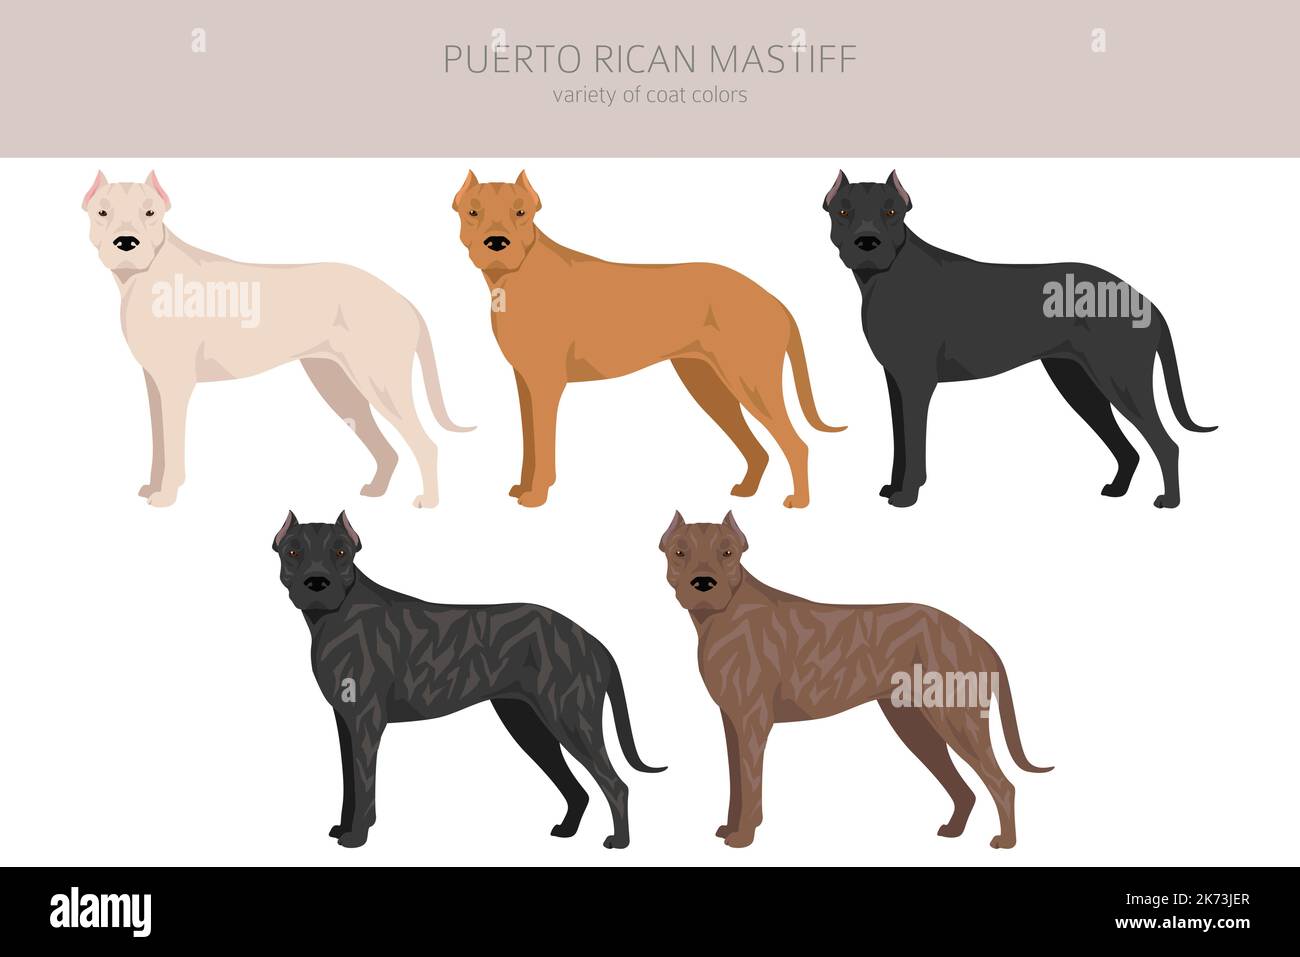 Puerto Rican Mastiff clipart. All coat colors set.  All dog breeds characteristics infographic. Vector illustration Stock Vector